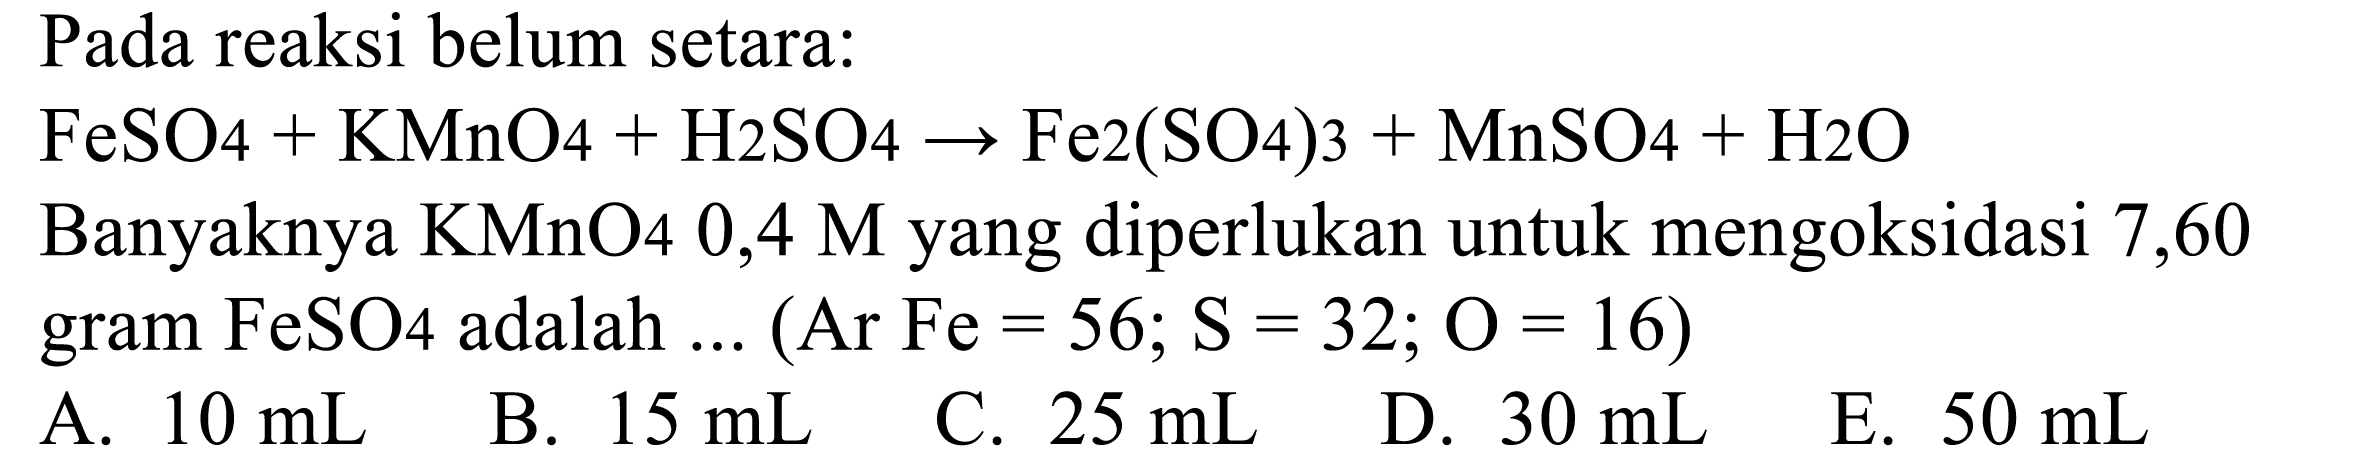 Pada reaksi belum setara: 
FeSO4 + KMnO4 + H2SO4 -> Fe2(SO4)3 + MnSO4 + H2O 
Banyaknya KMnO4 0,4 M yang diperlukan untuk mengoksidasi 7,60 gram FeSO4 adalah ... (Ar Fe = 56; S = 32; O = 16)